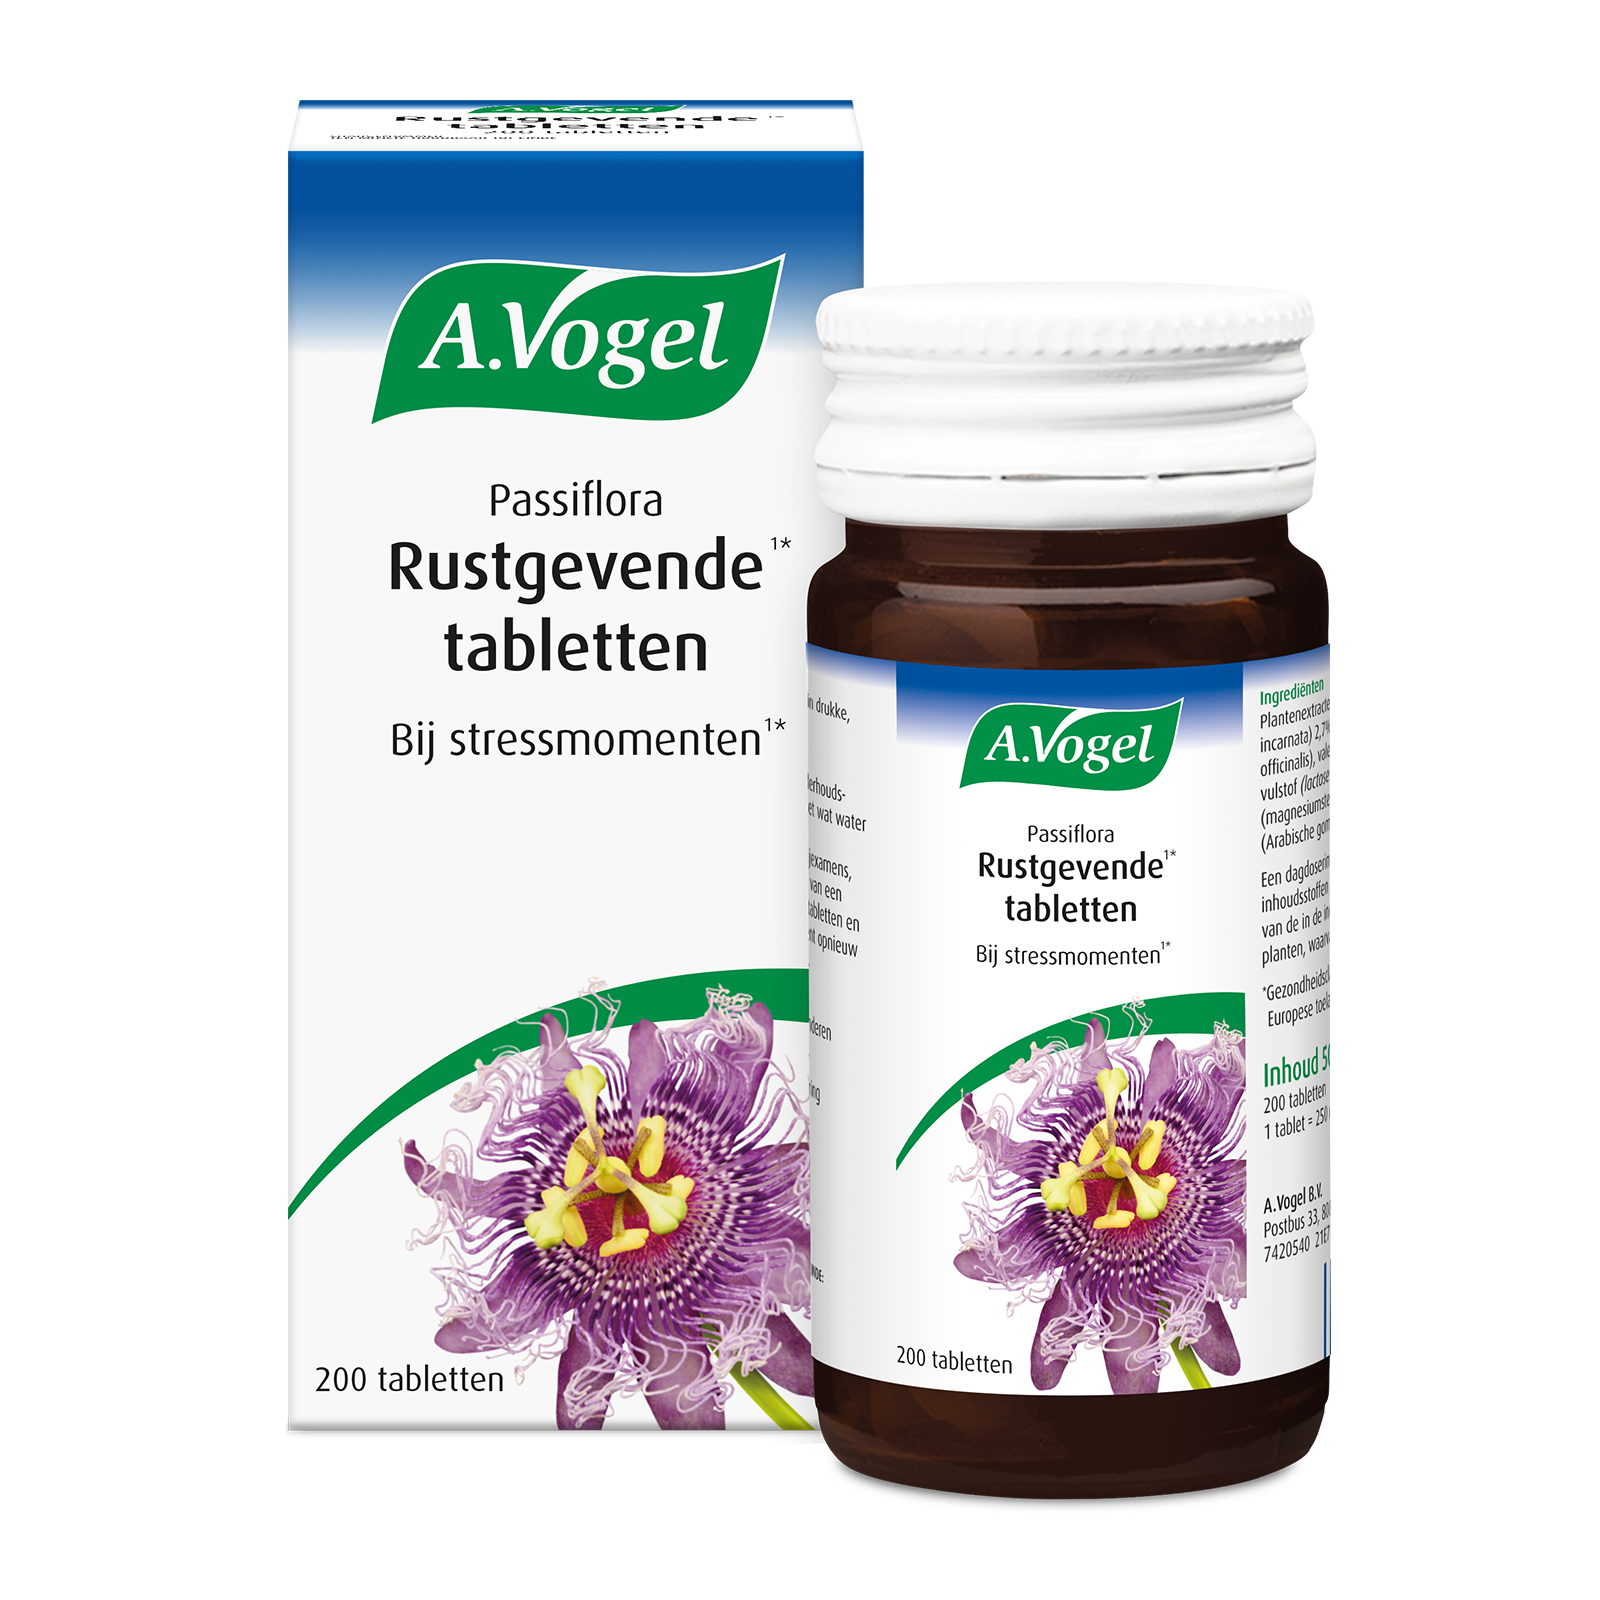 A.Vogel Passiflora Rustgevende* Tabletten